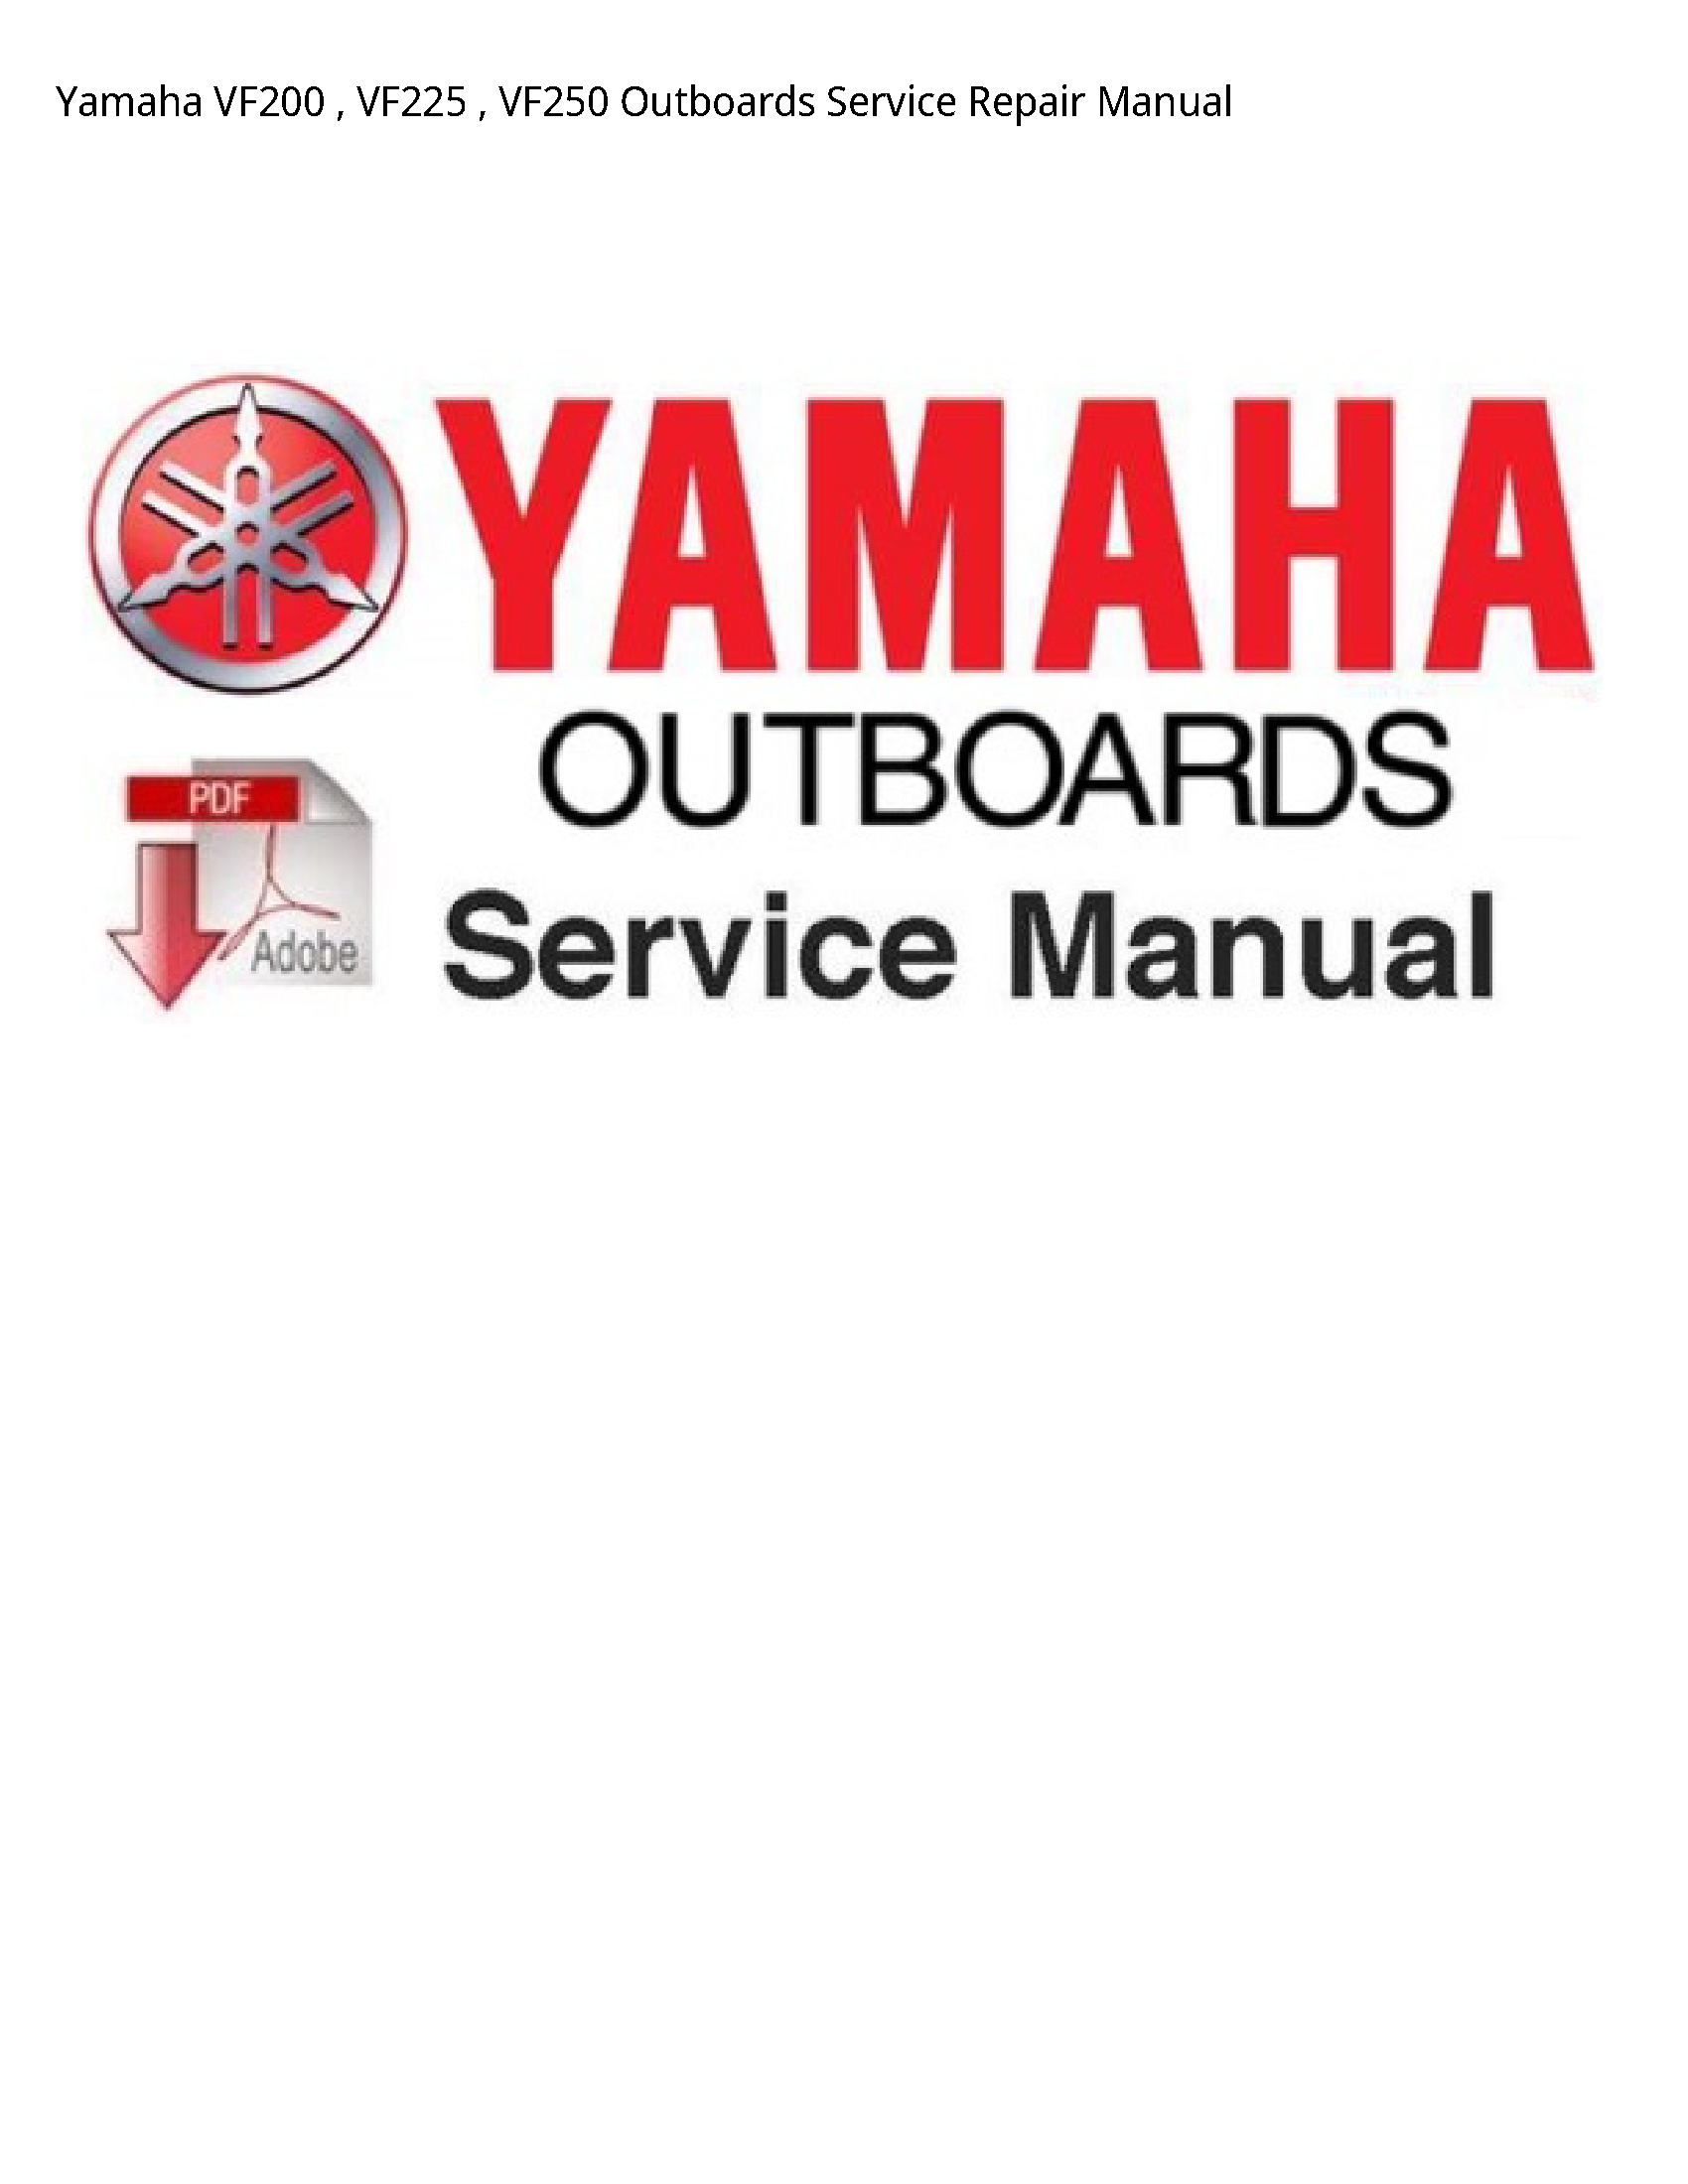 Yamaha VF200 Outboards manual